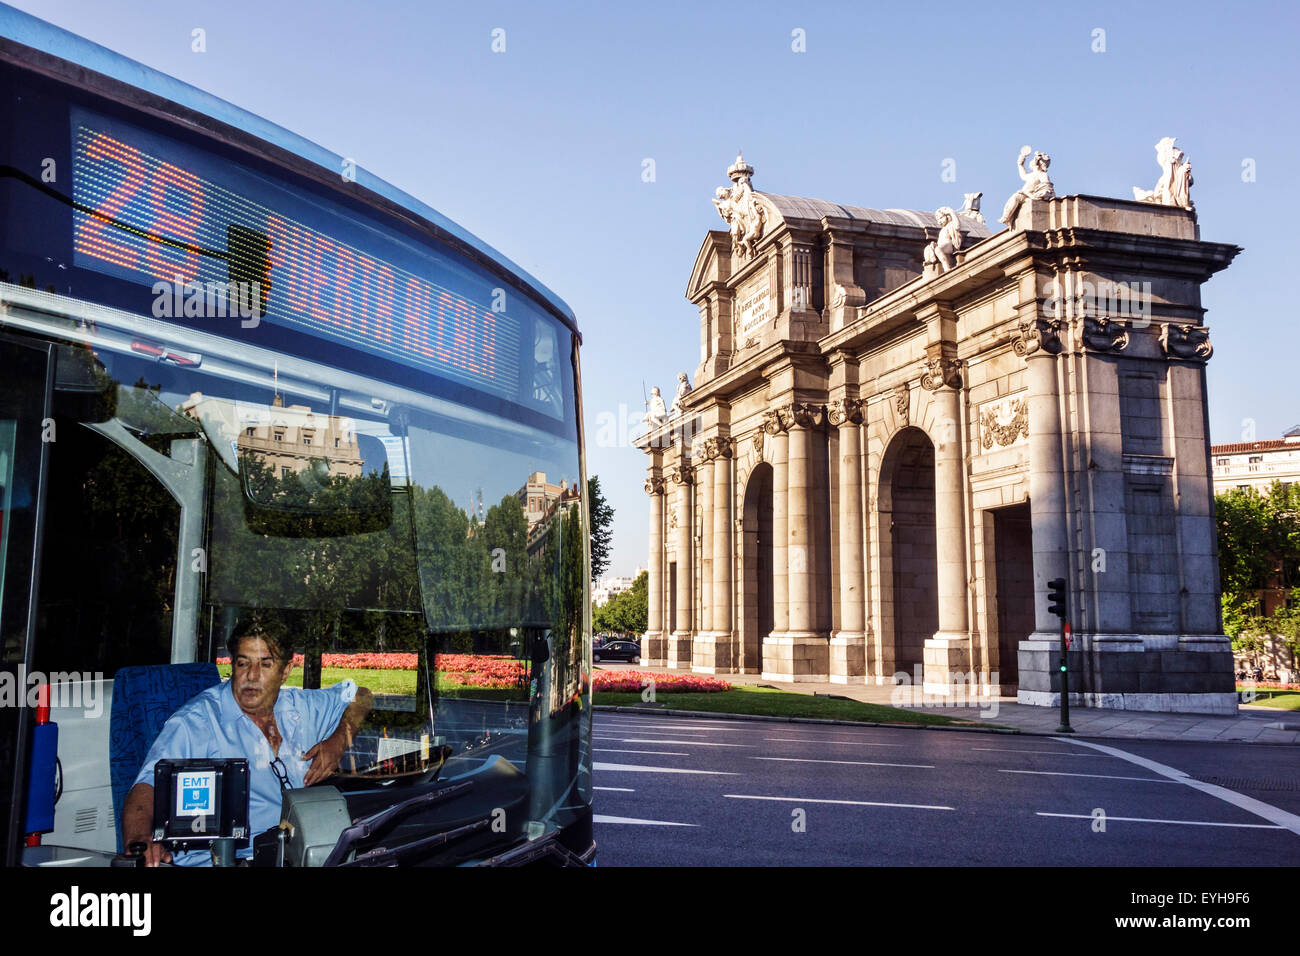 Madrid Spain,Recoletos,Salamanca,Puerta de Alcala,Calle de Alcala,Plaza de la Independencia,monument,Francesco Sabatini,neoclassical architecture,bus, Stock Photo